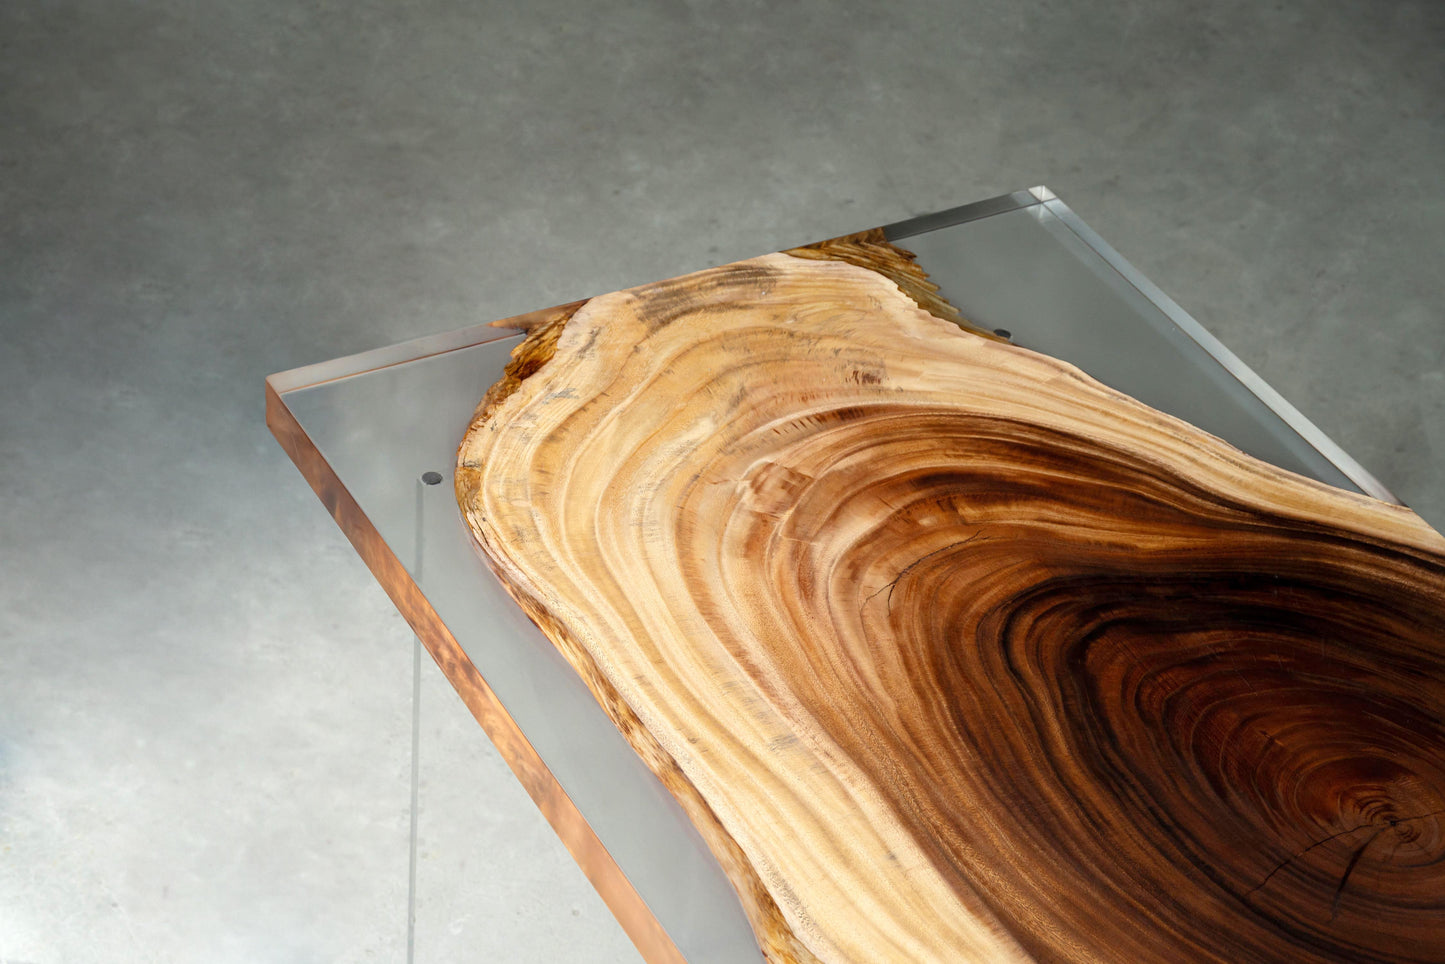 Walnut Wood Epoxy Resin Table